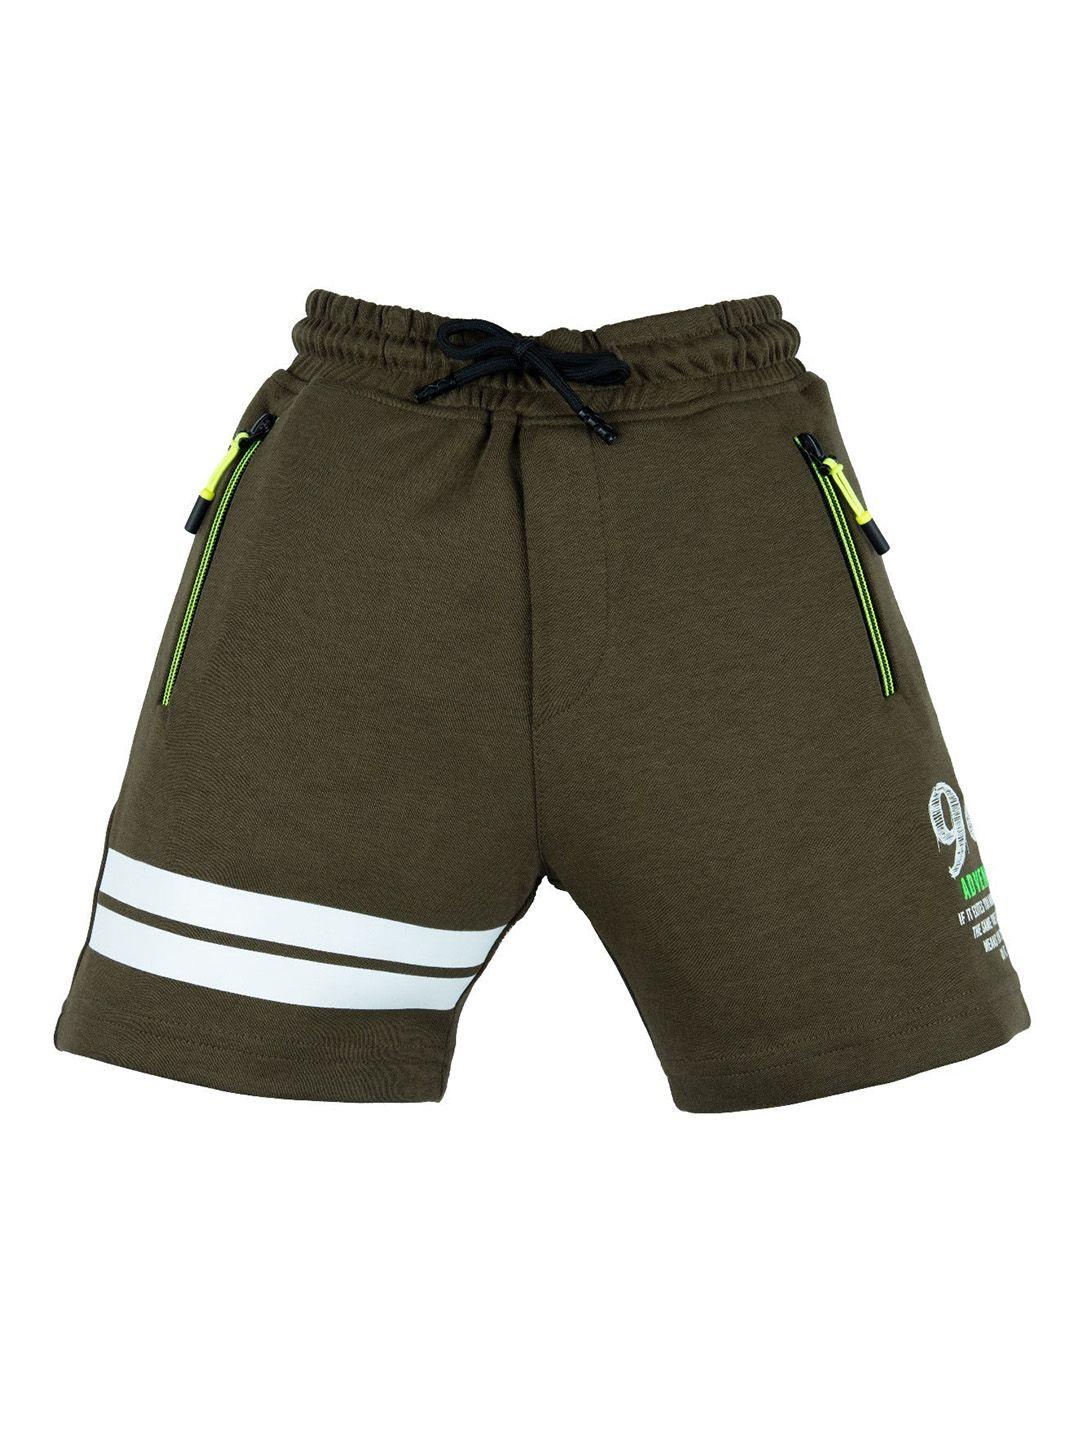 status quo boys olive green printed regular shorts